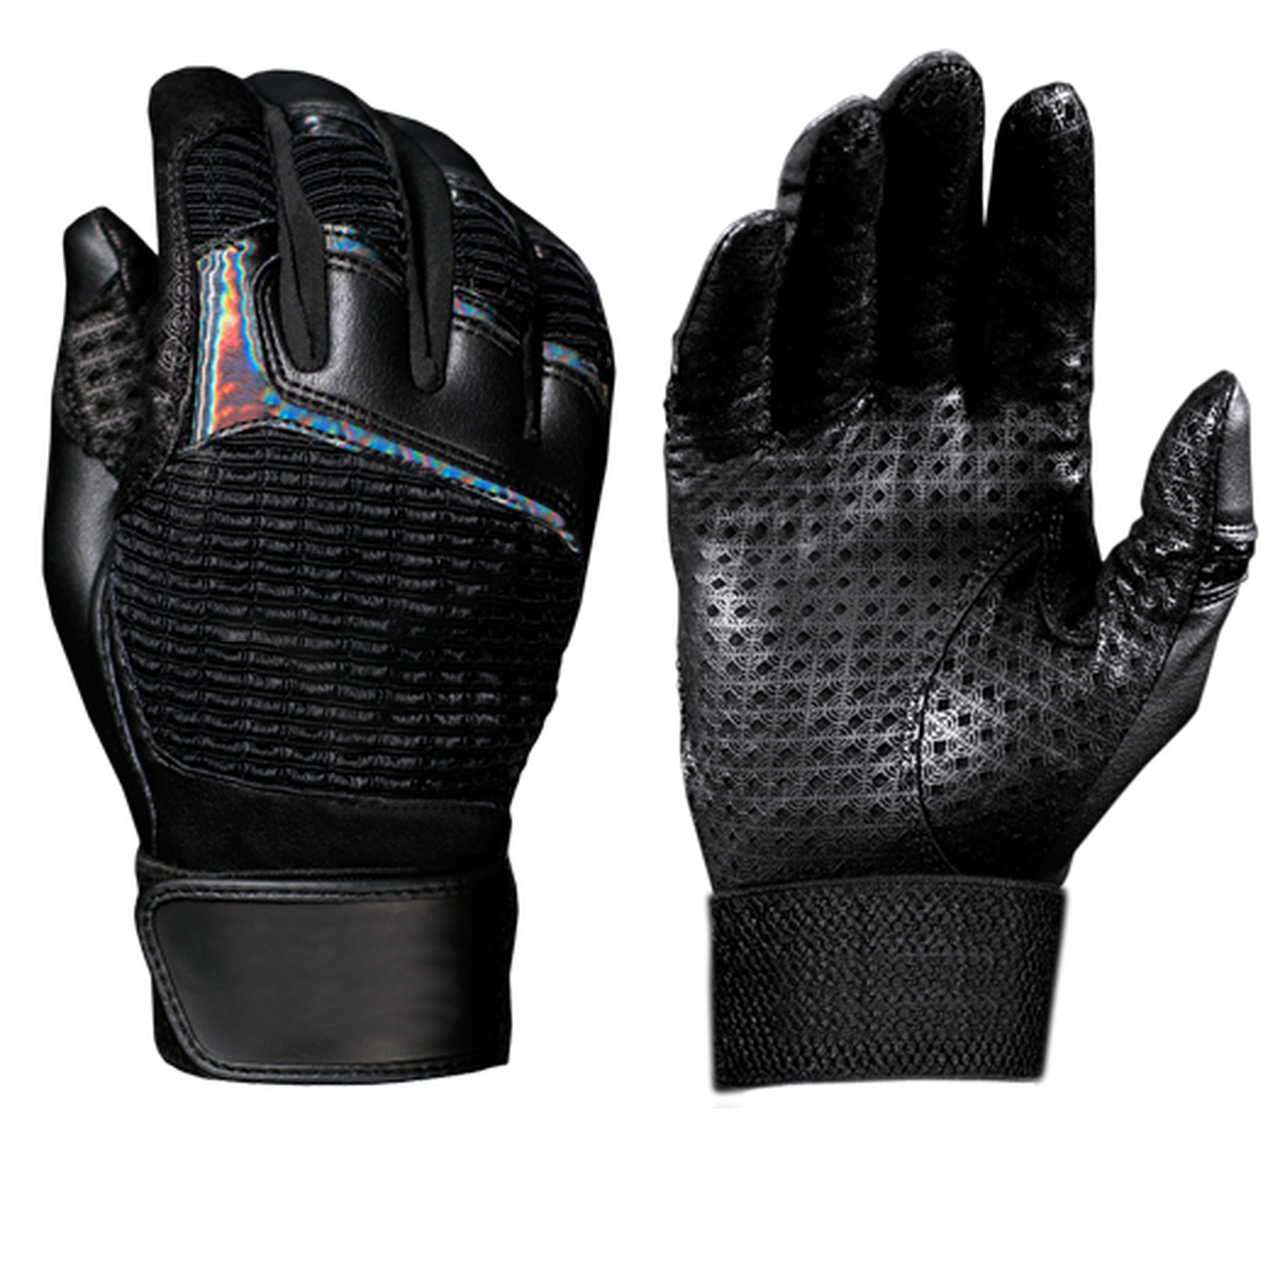 Genuine leather moisture-wicking durable black adult batting gloves